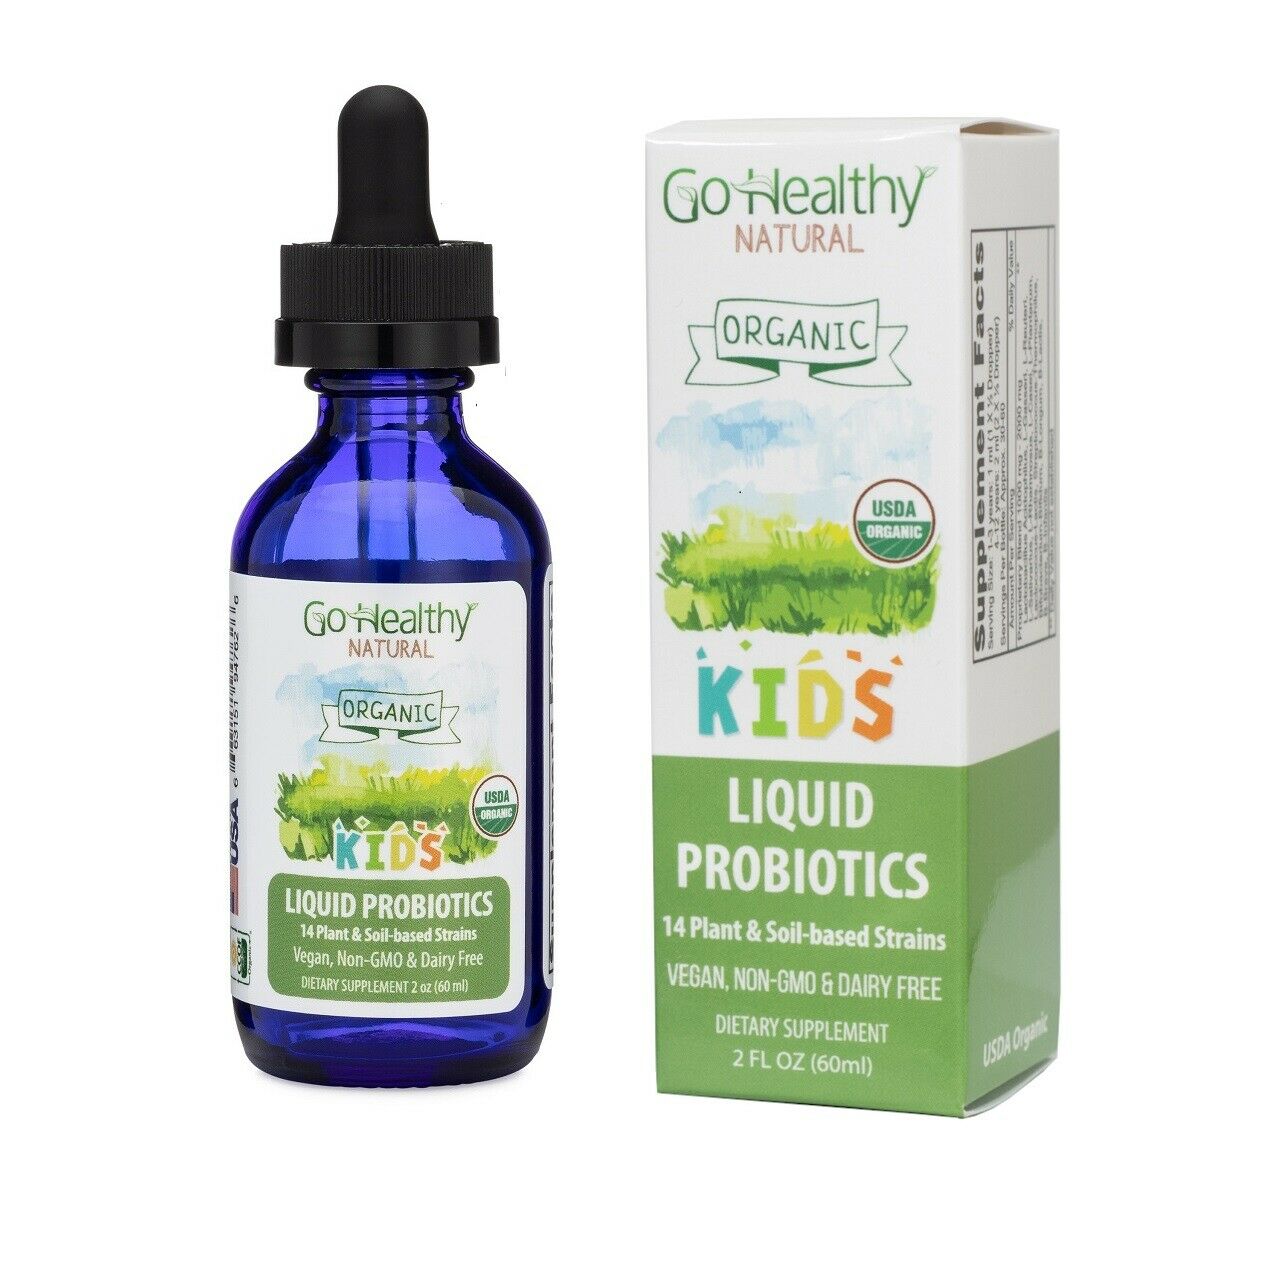 Go Healthy Natural Kids Liquid Probiotics with Enzymes, USDA Organic, Vegan